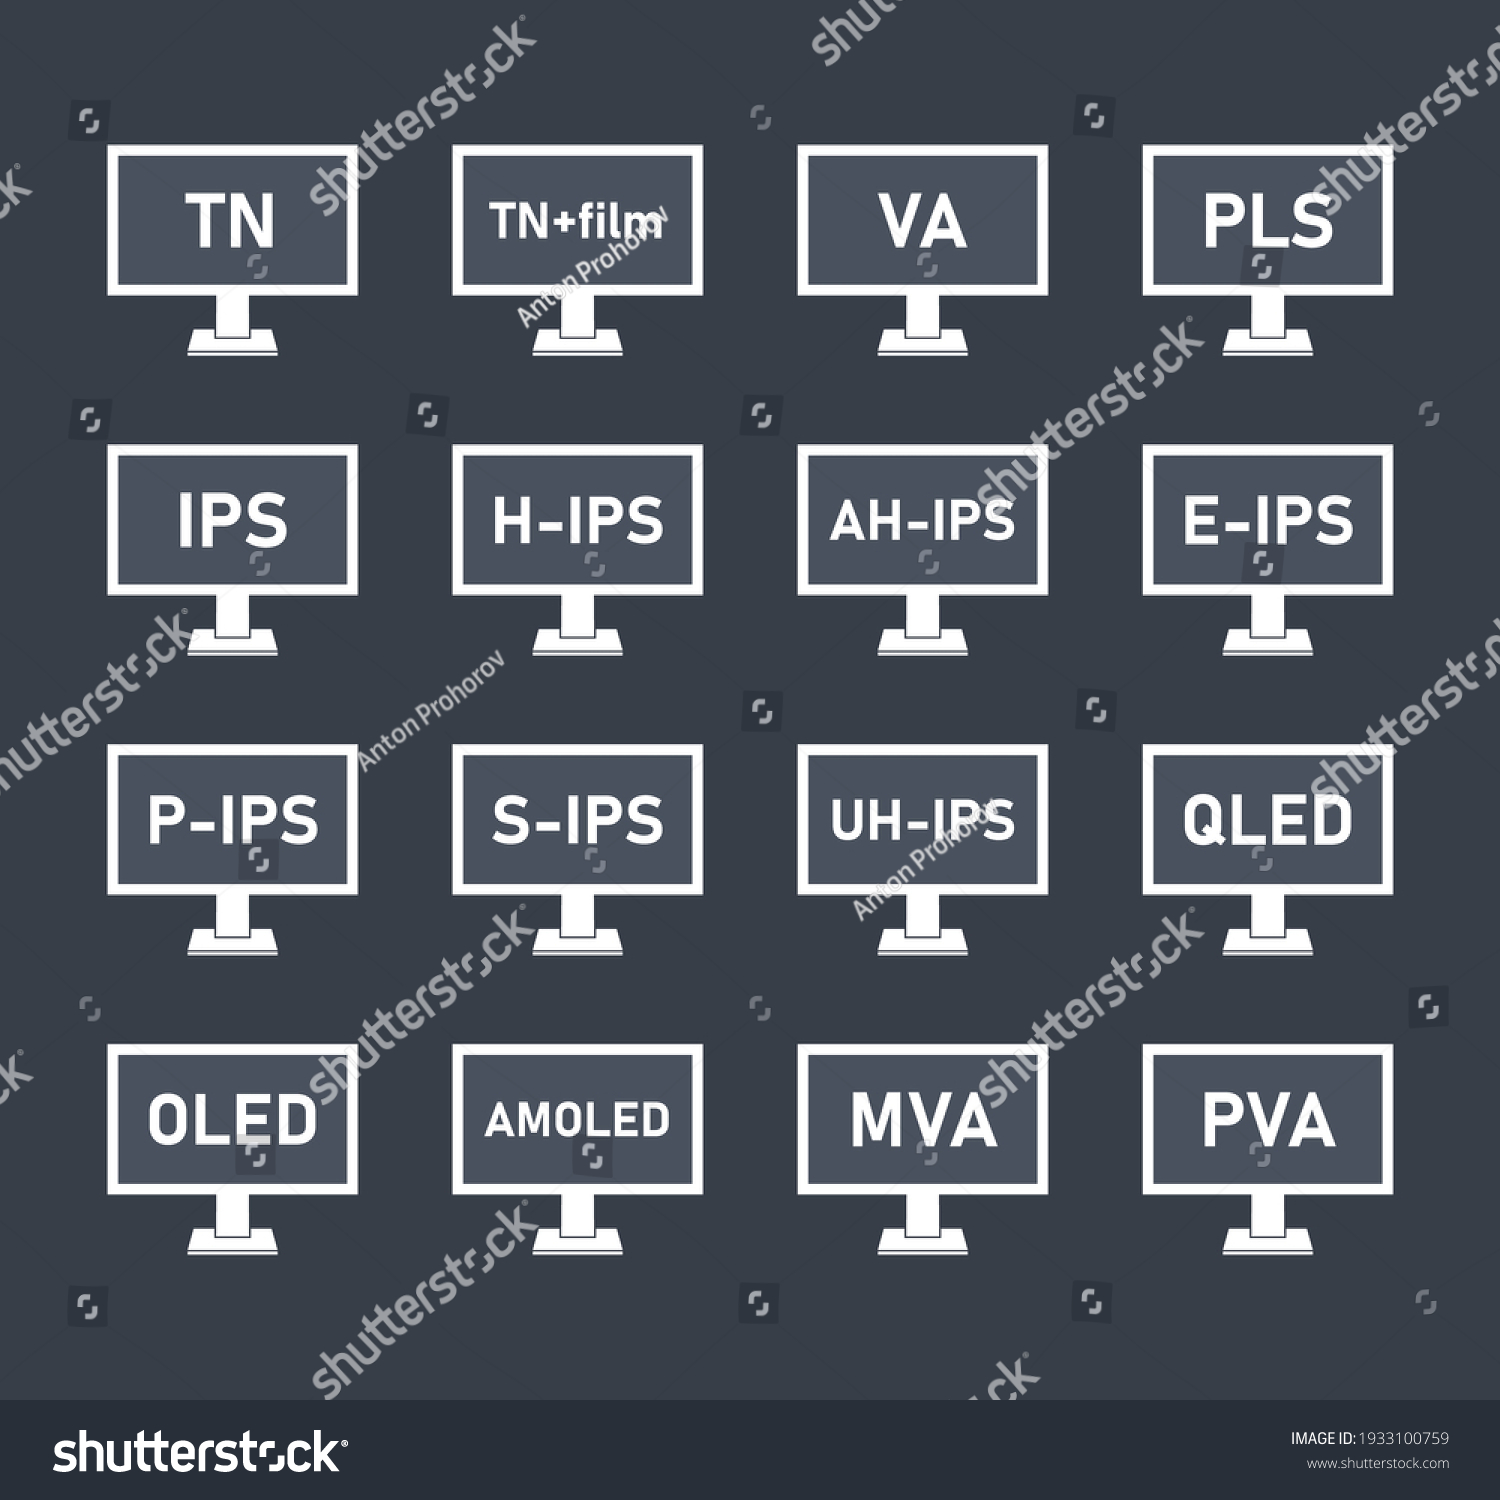 SVG of monitor matrix icon set, types of LCD matrices - IPS, VA, TN, OLED svg